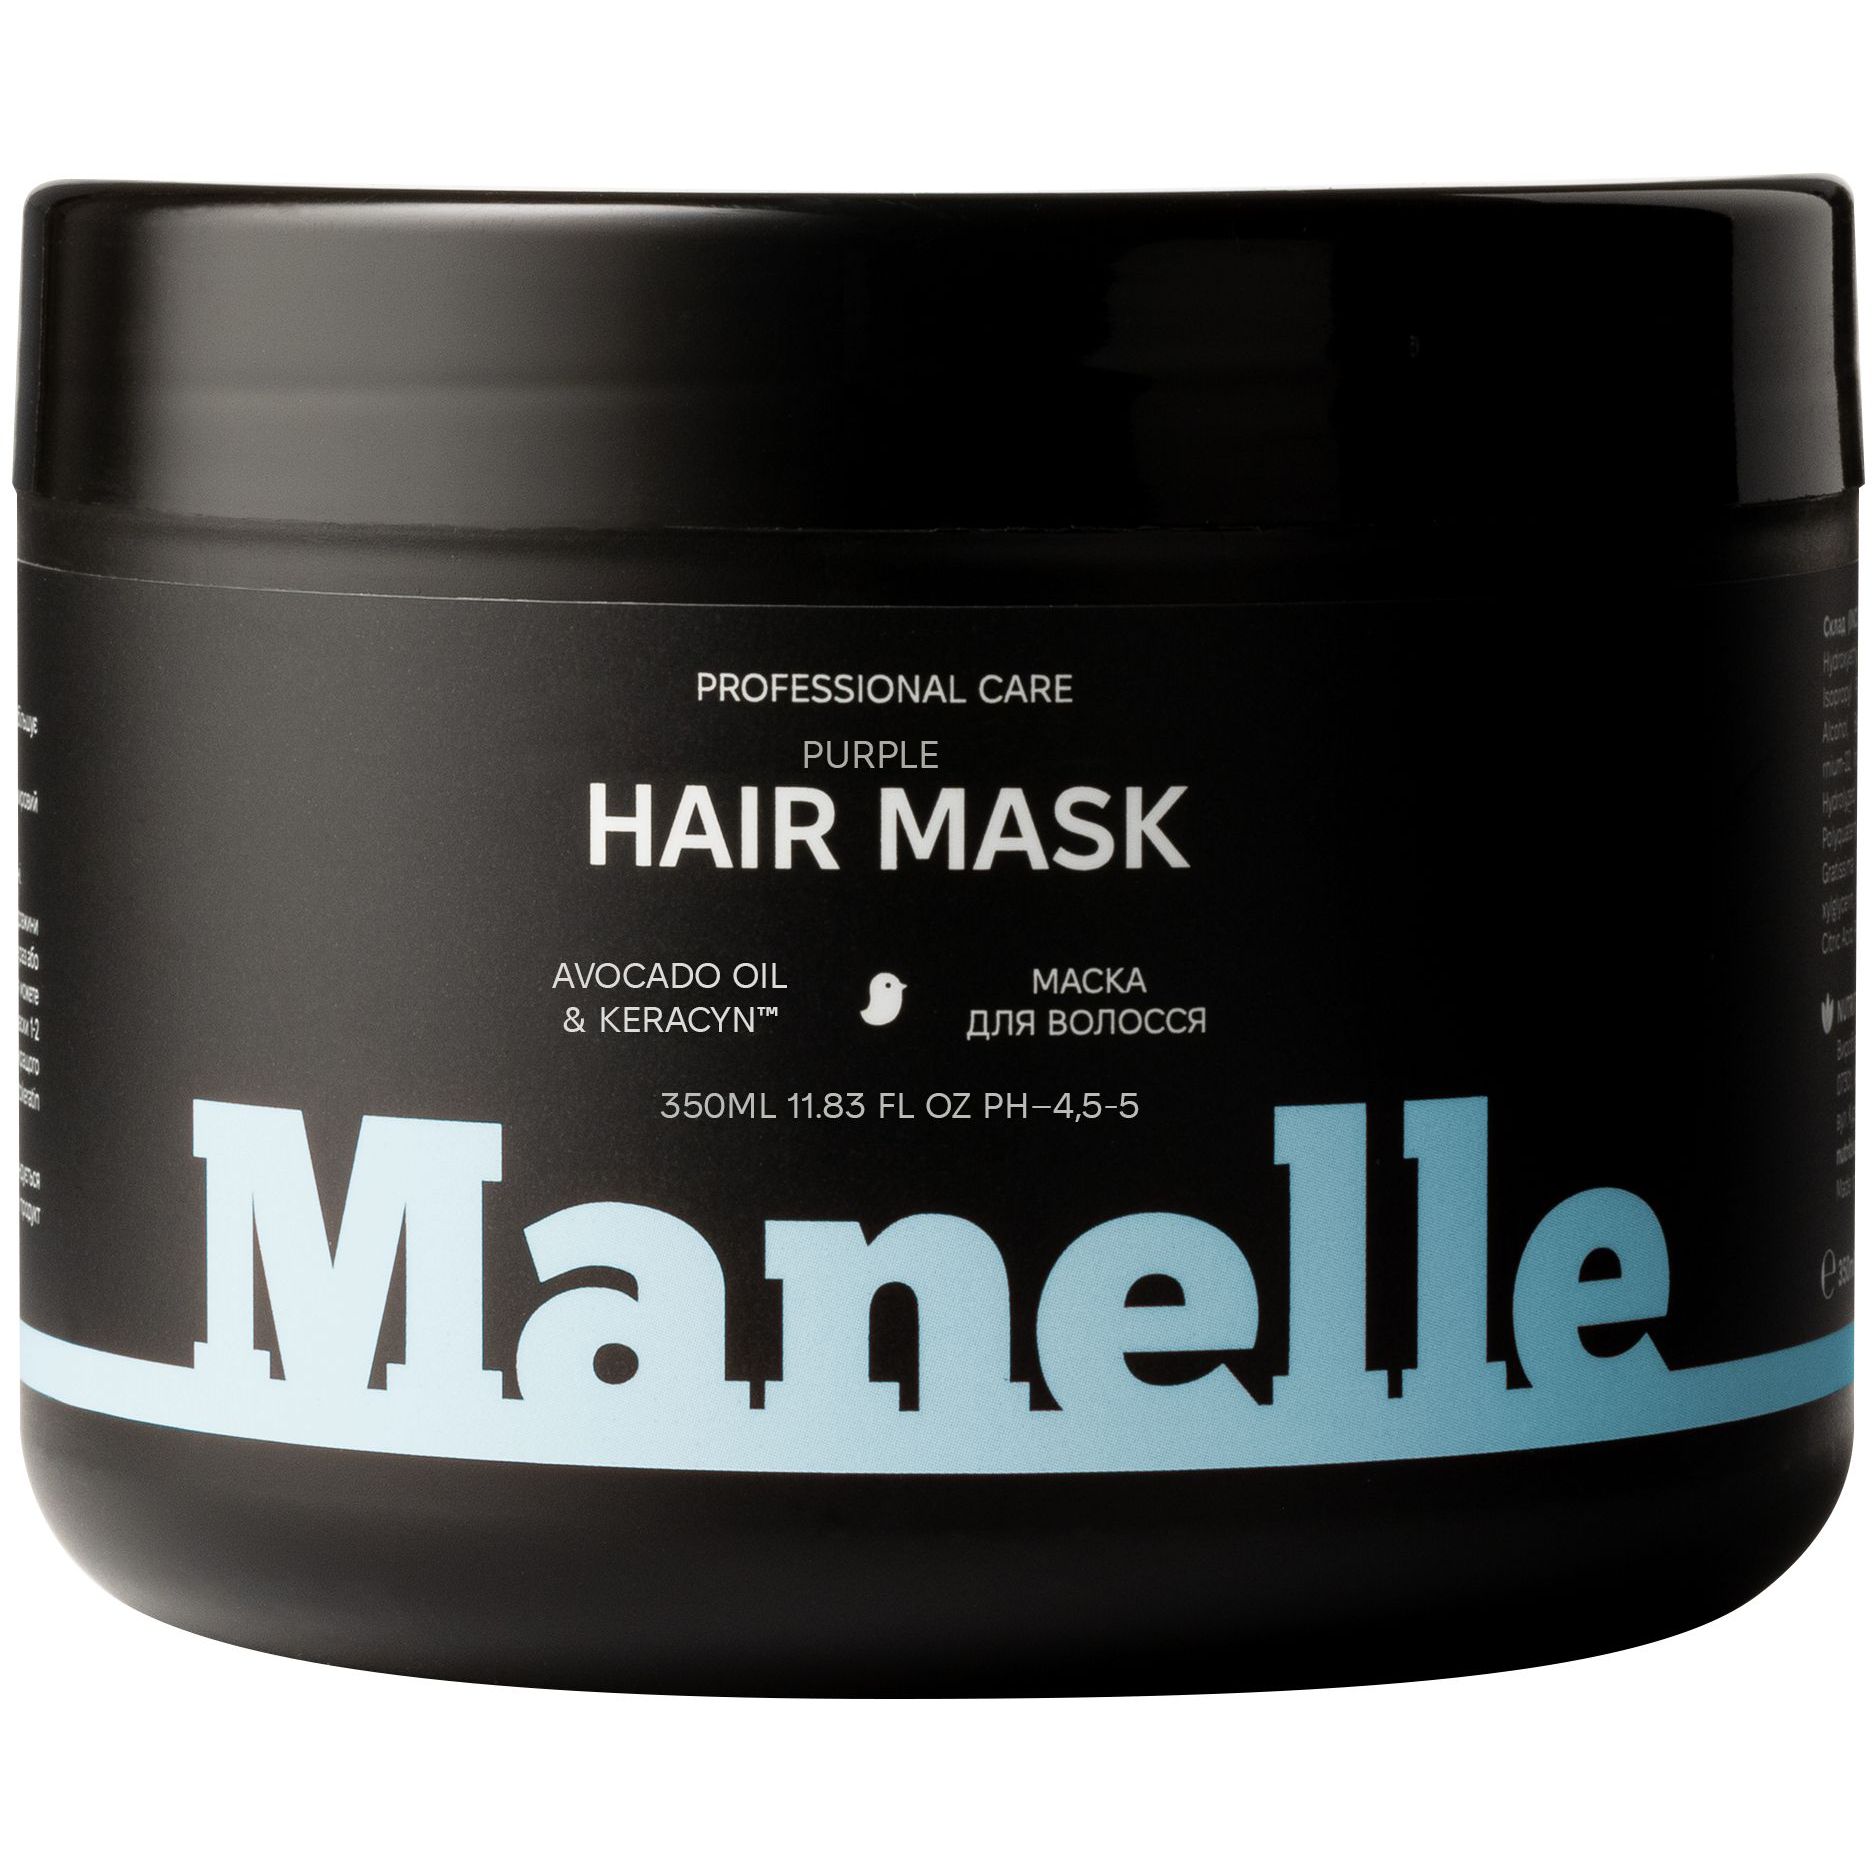 Тонуюча маска для волосся Manelle Professional care Avocado Oil & Keracyn 350 мл - фото 1